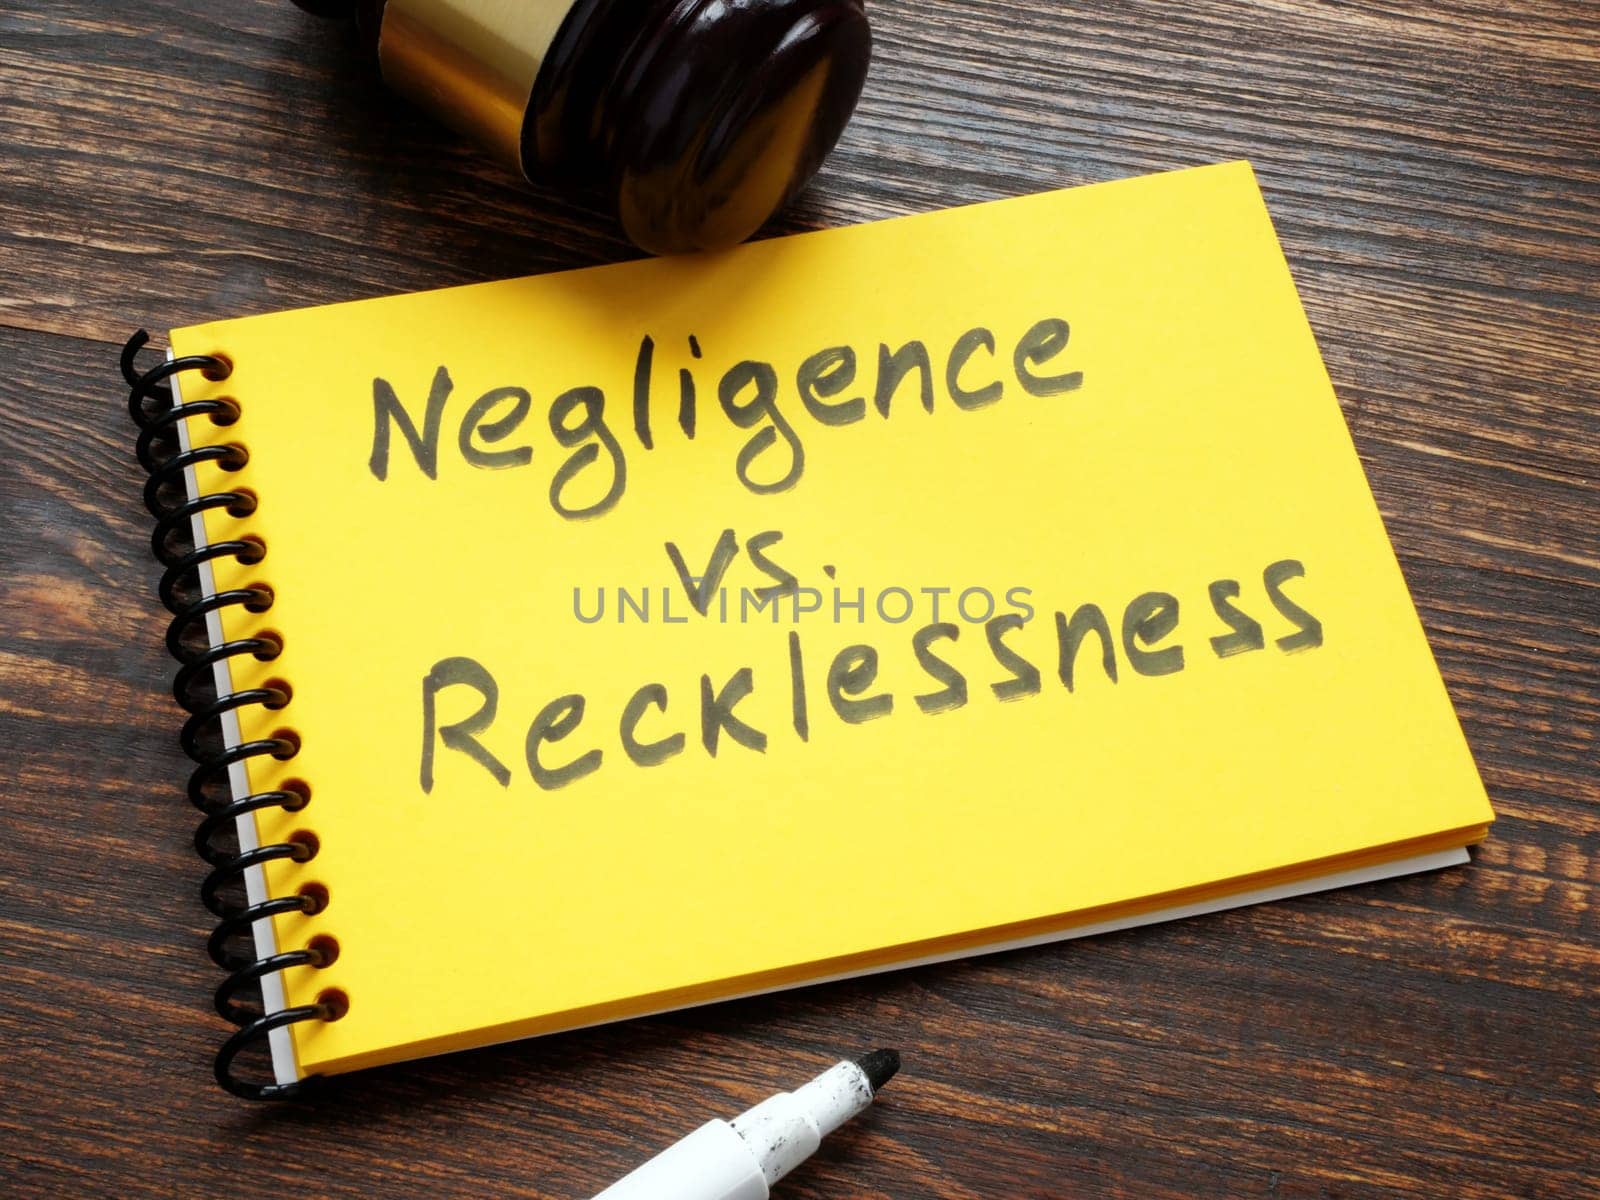 Negligence vs recklessness inscription and gavel.